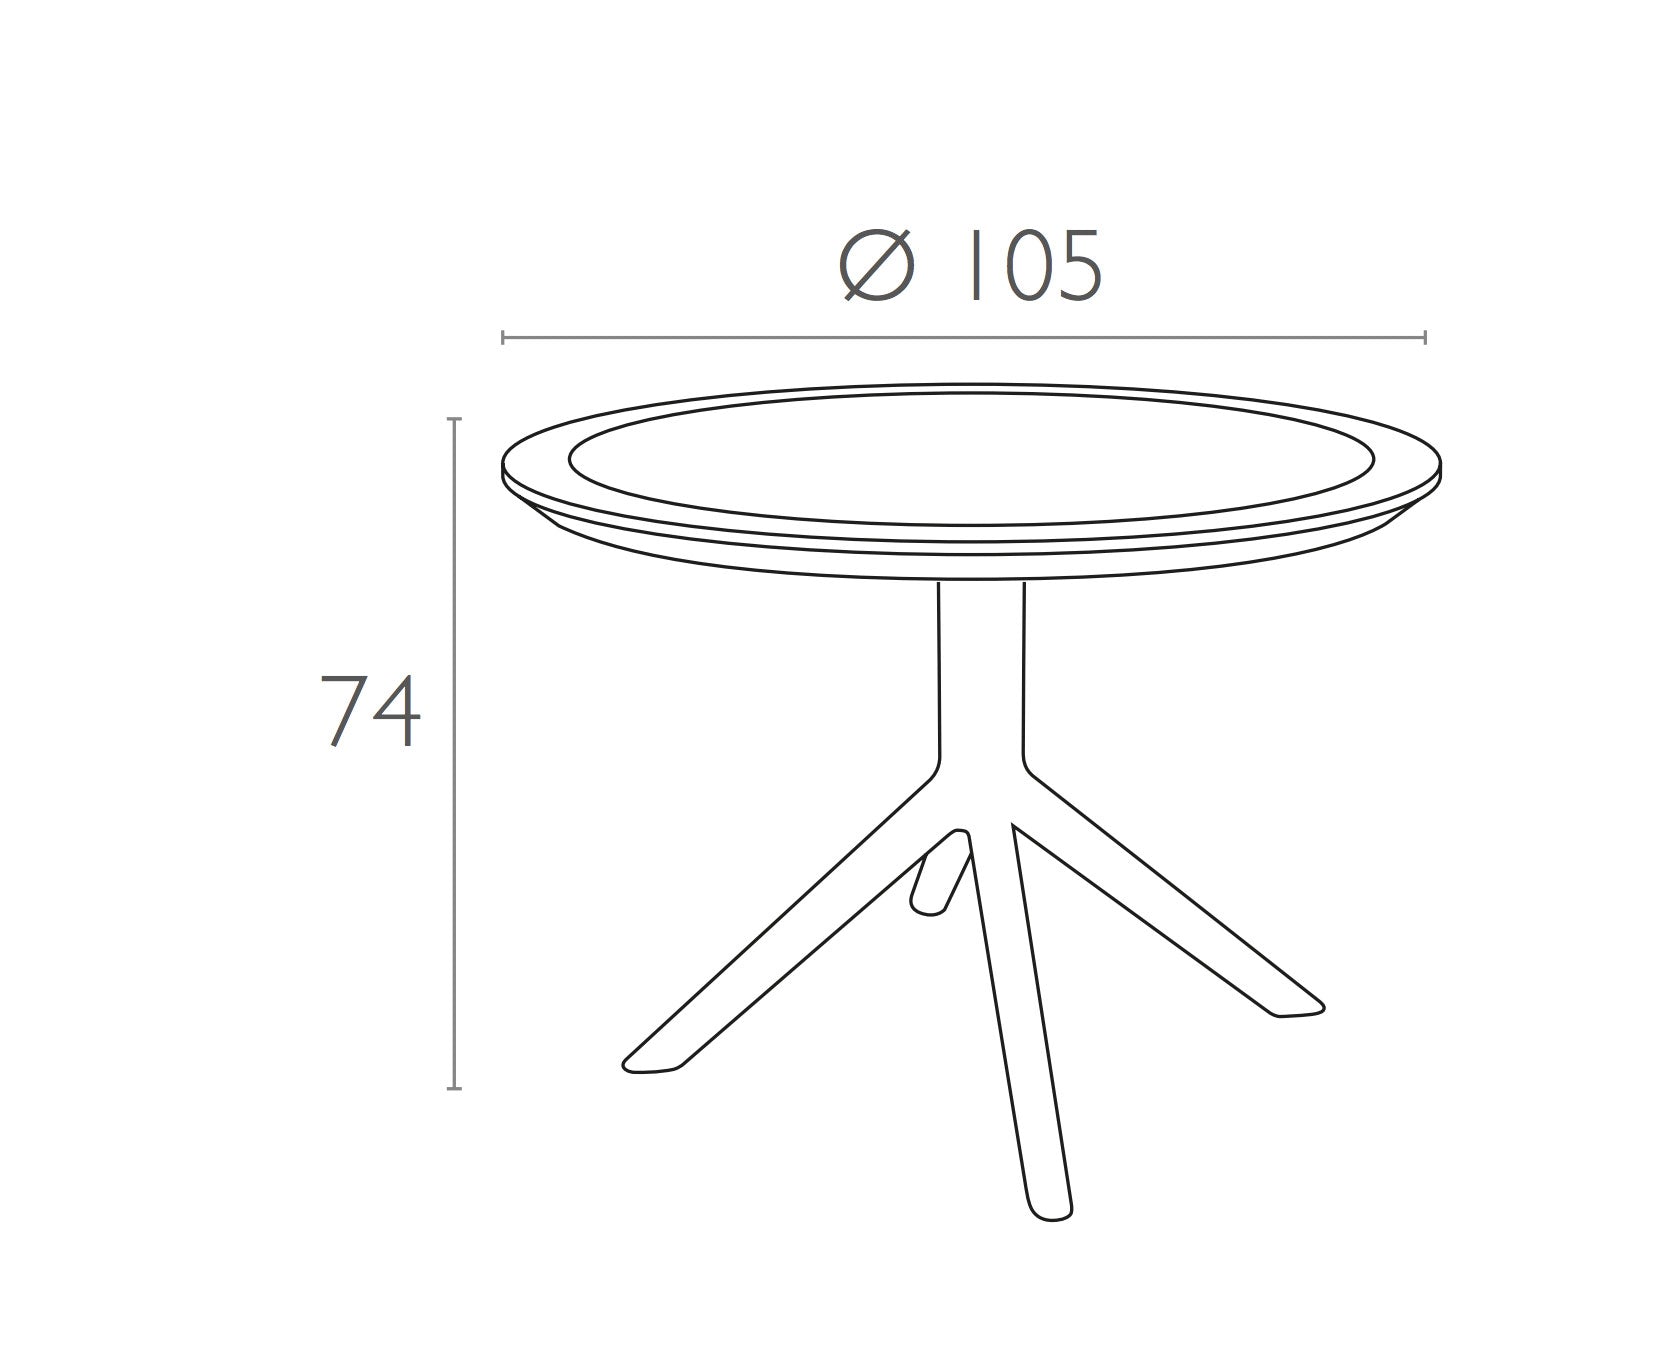 siesta sky round table dimensions